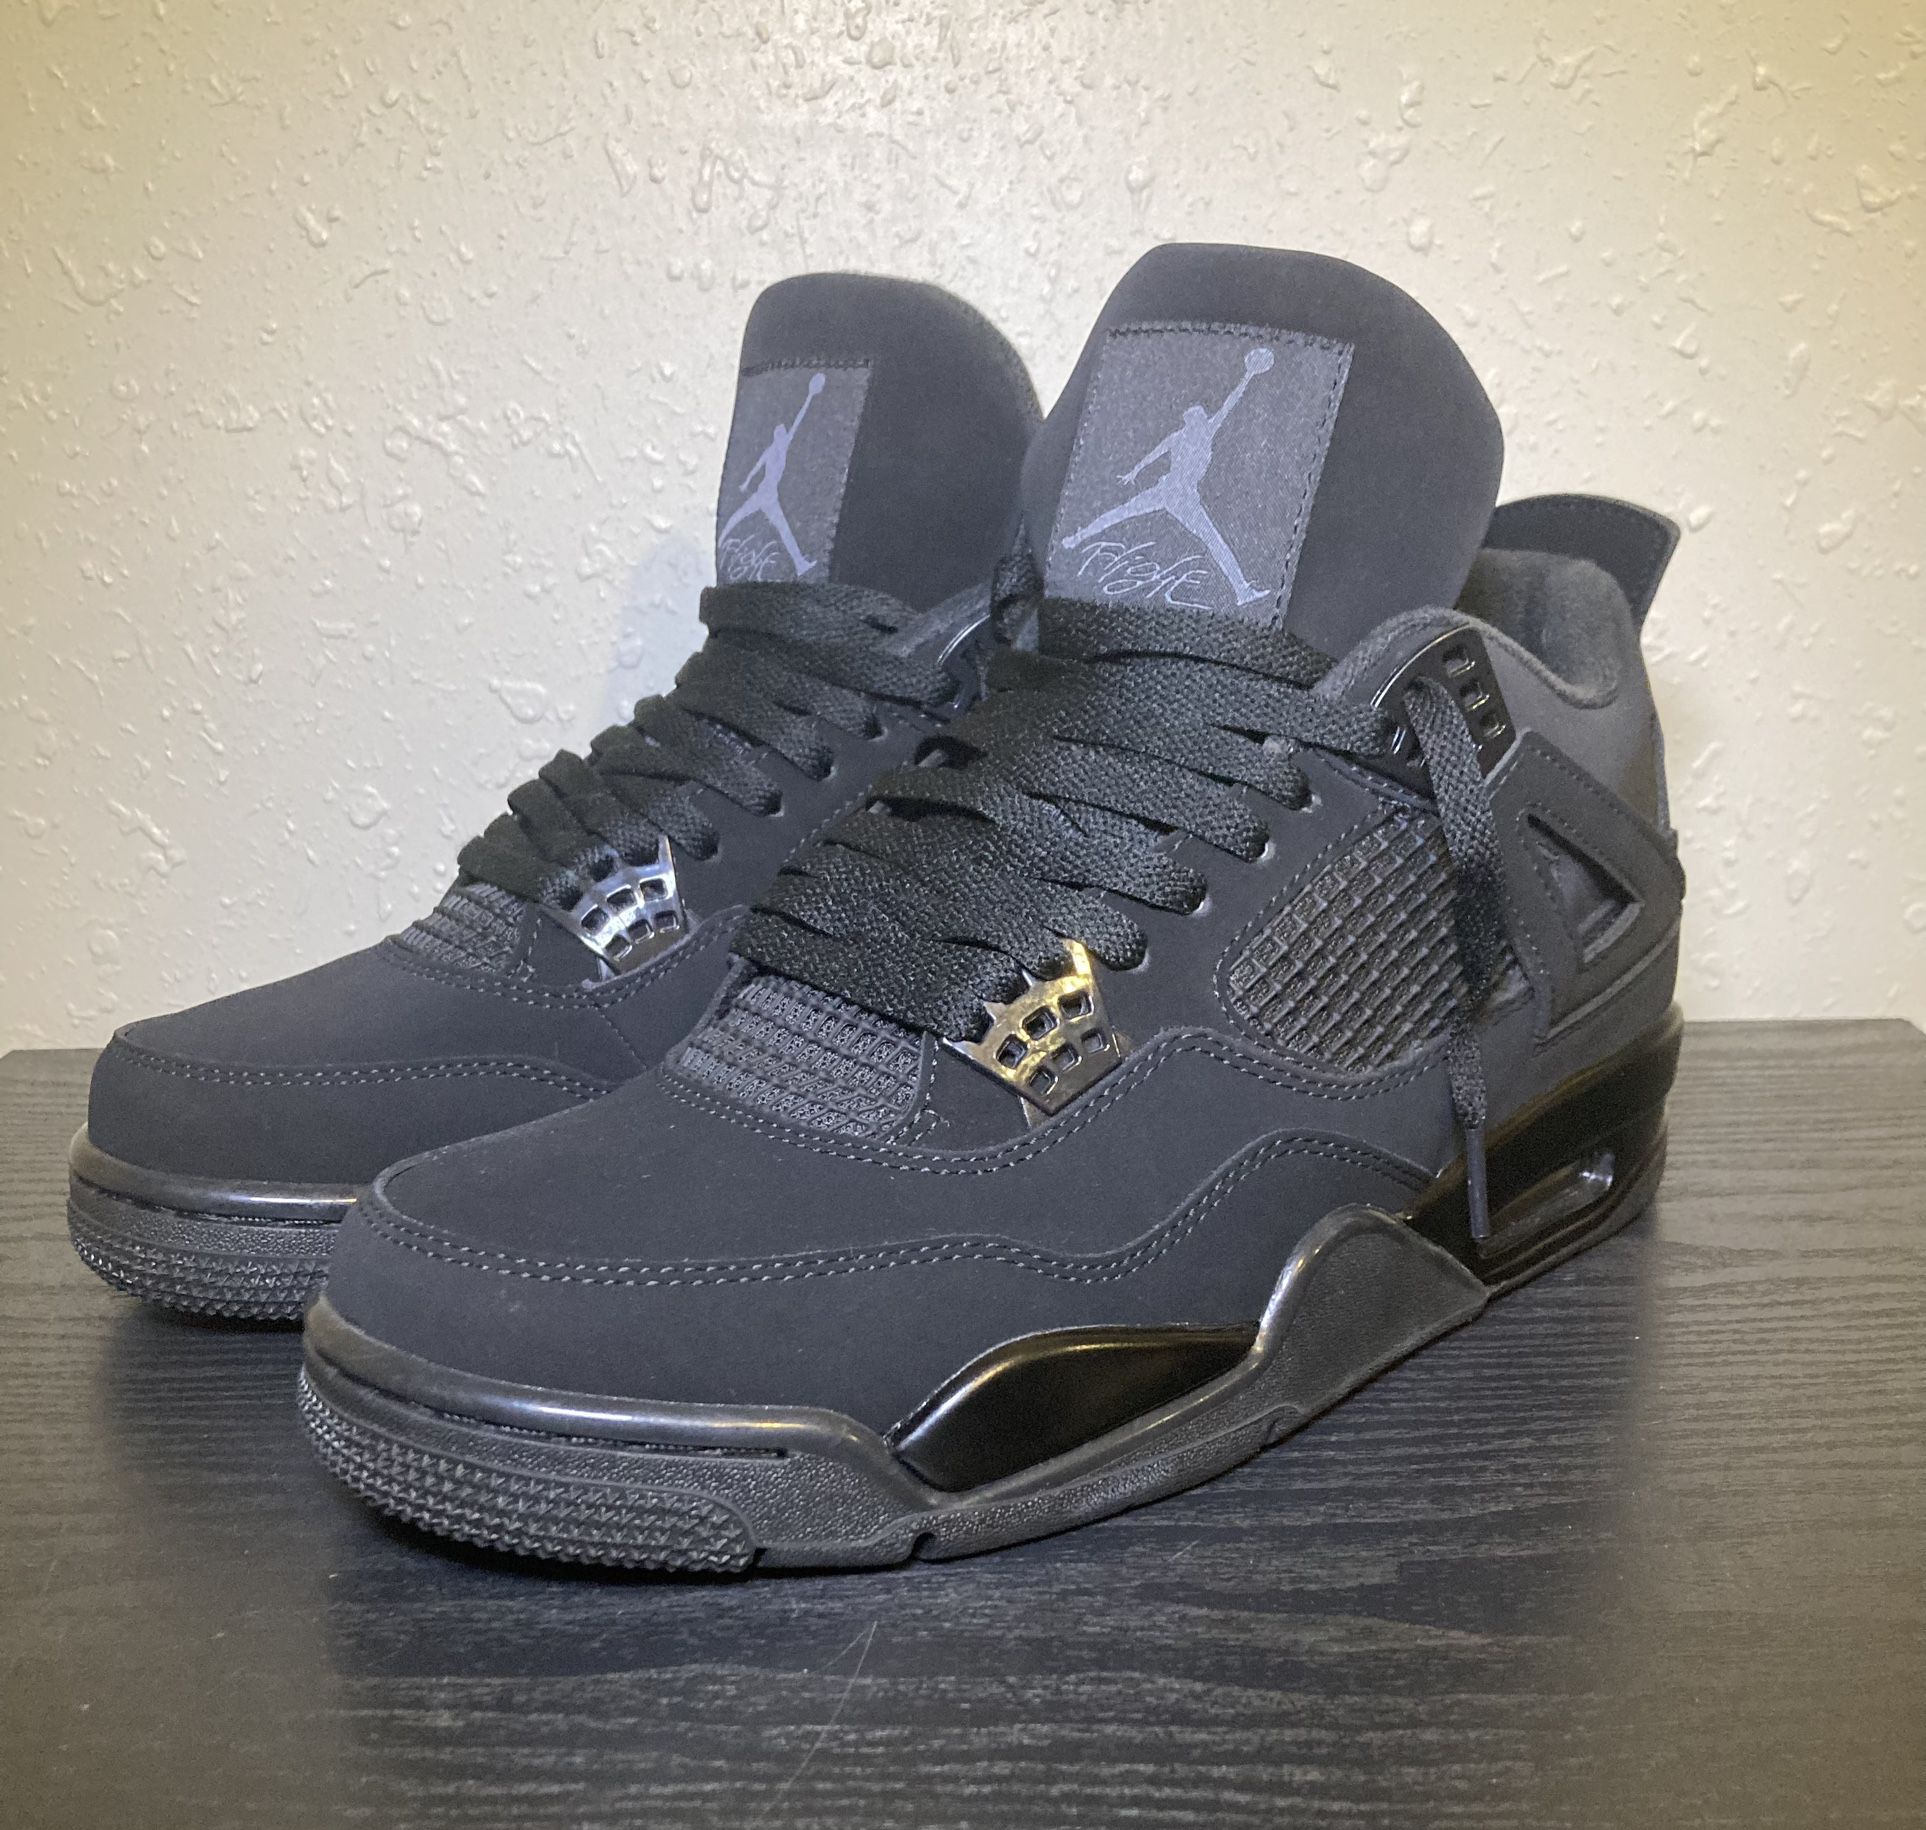 Air Jordan 4 “Black Cats” US Size 10 Mens